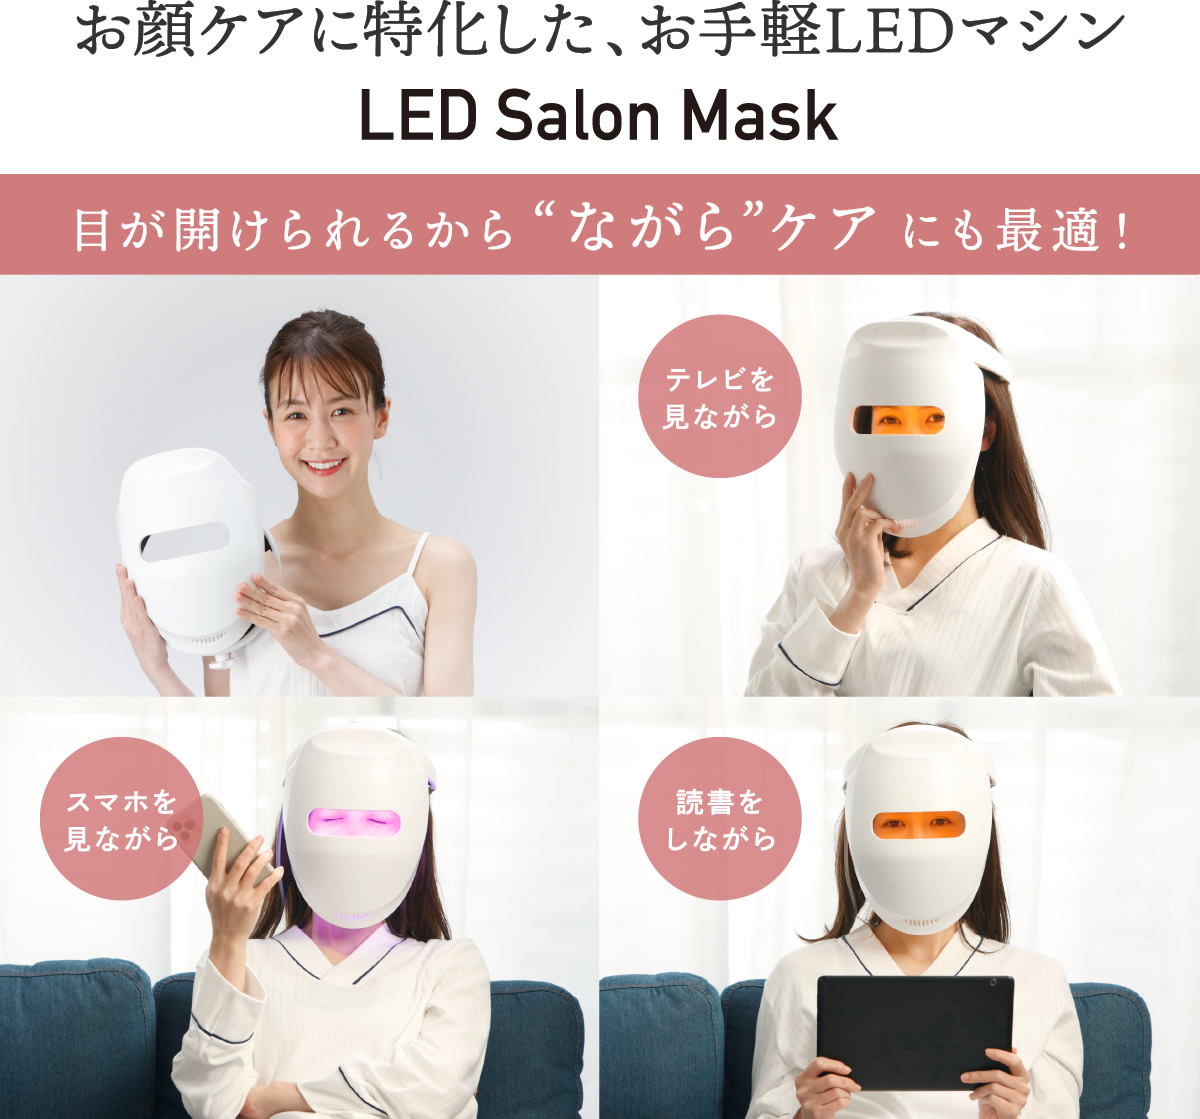 LED Salon Maskはお顔ケアに特化した、お手軽LEDマシンです。目を開けられるから「ながら」ケアにも最適！